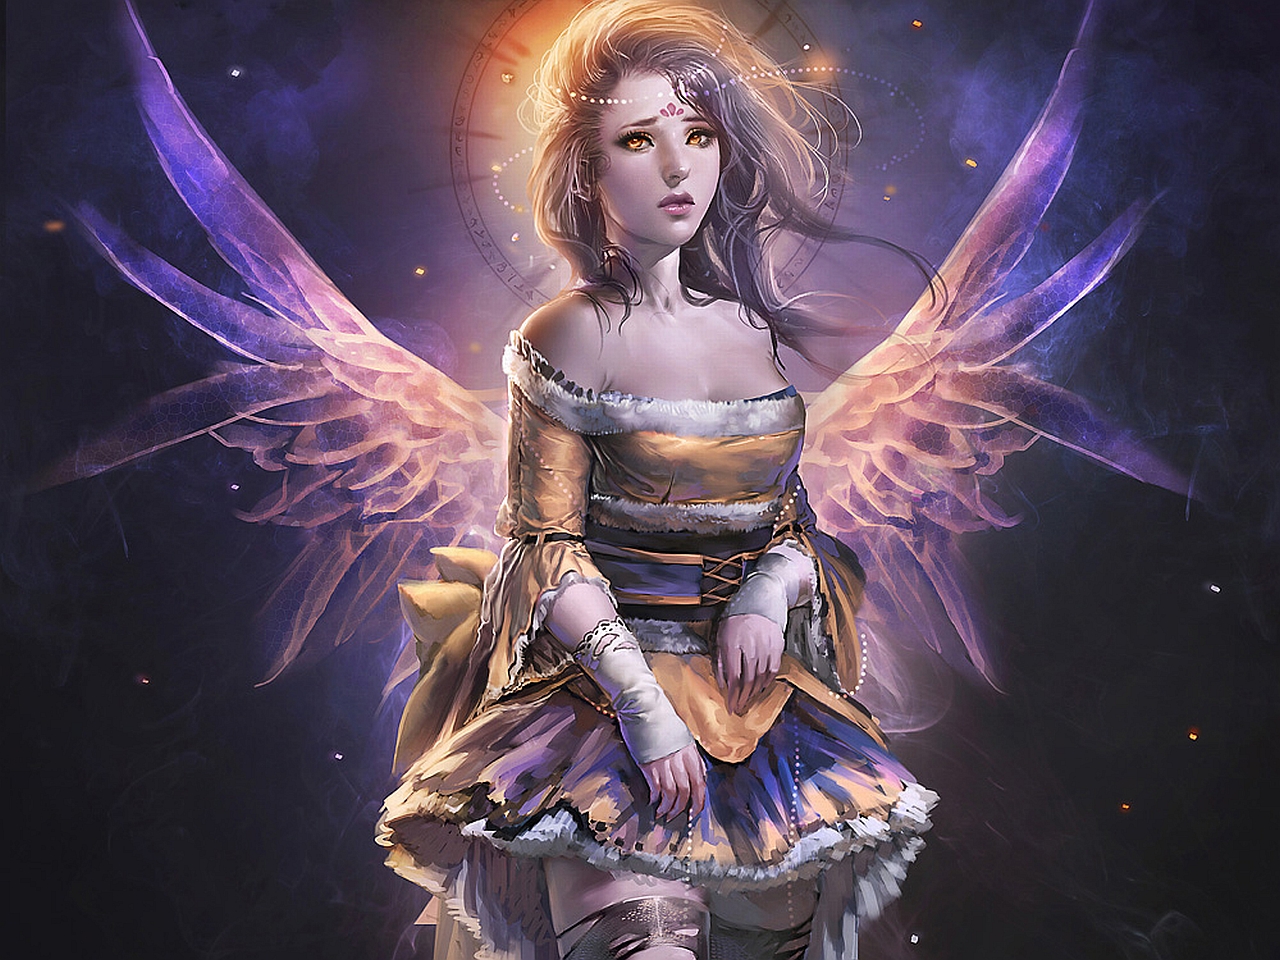 The Sad Face Wallpaper - Fairy Girl Fantasy Art - HD Wallpaper 